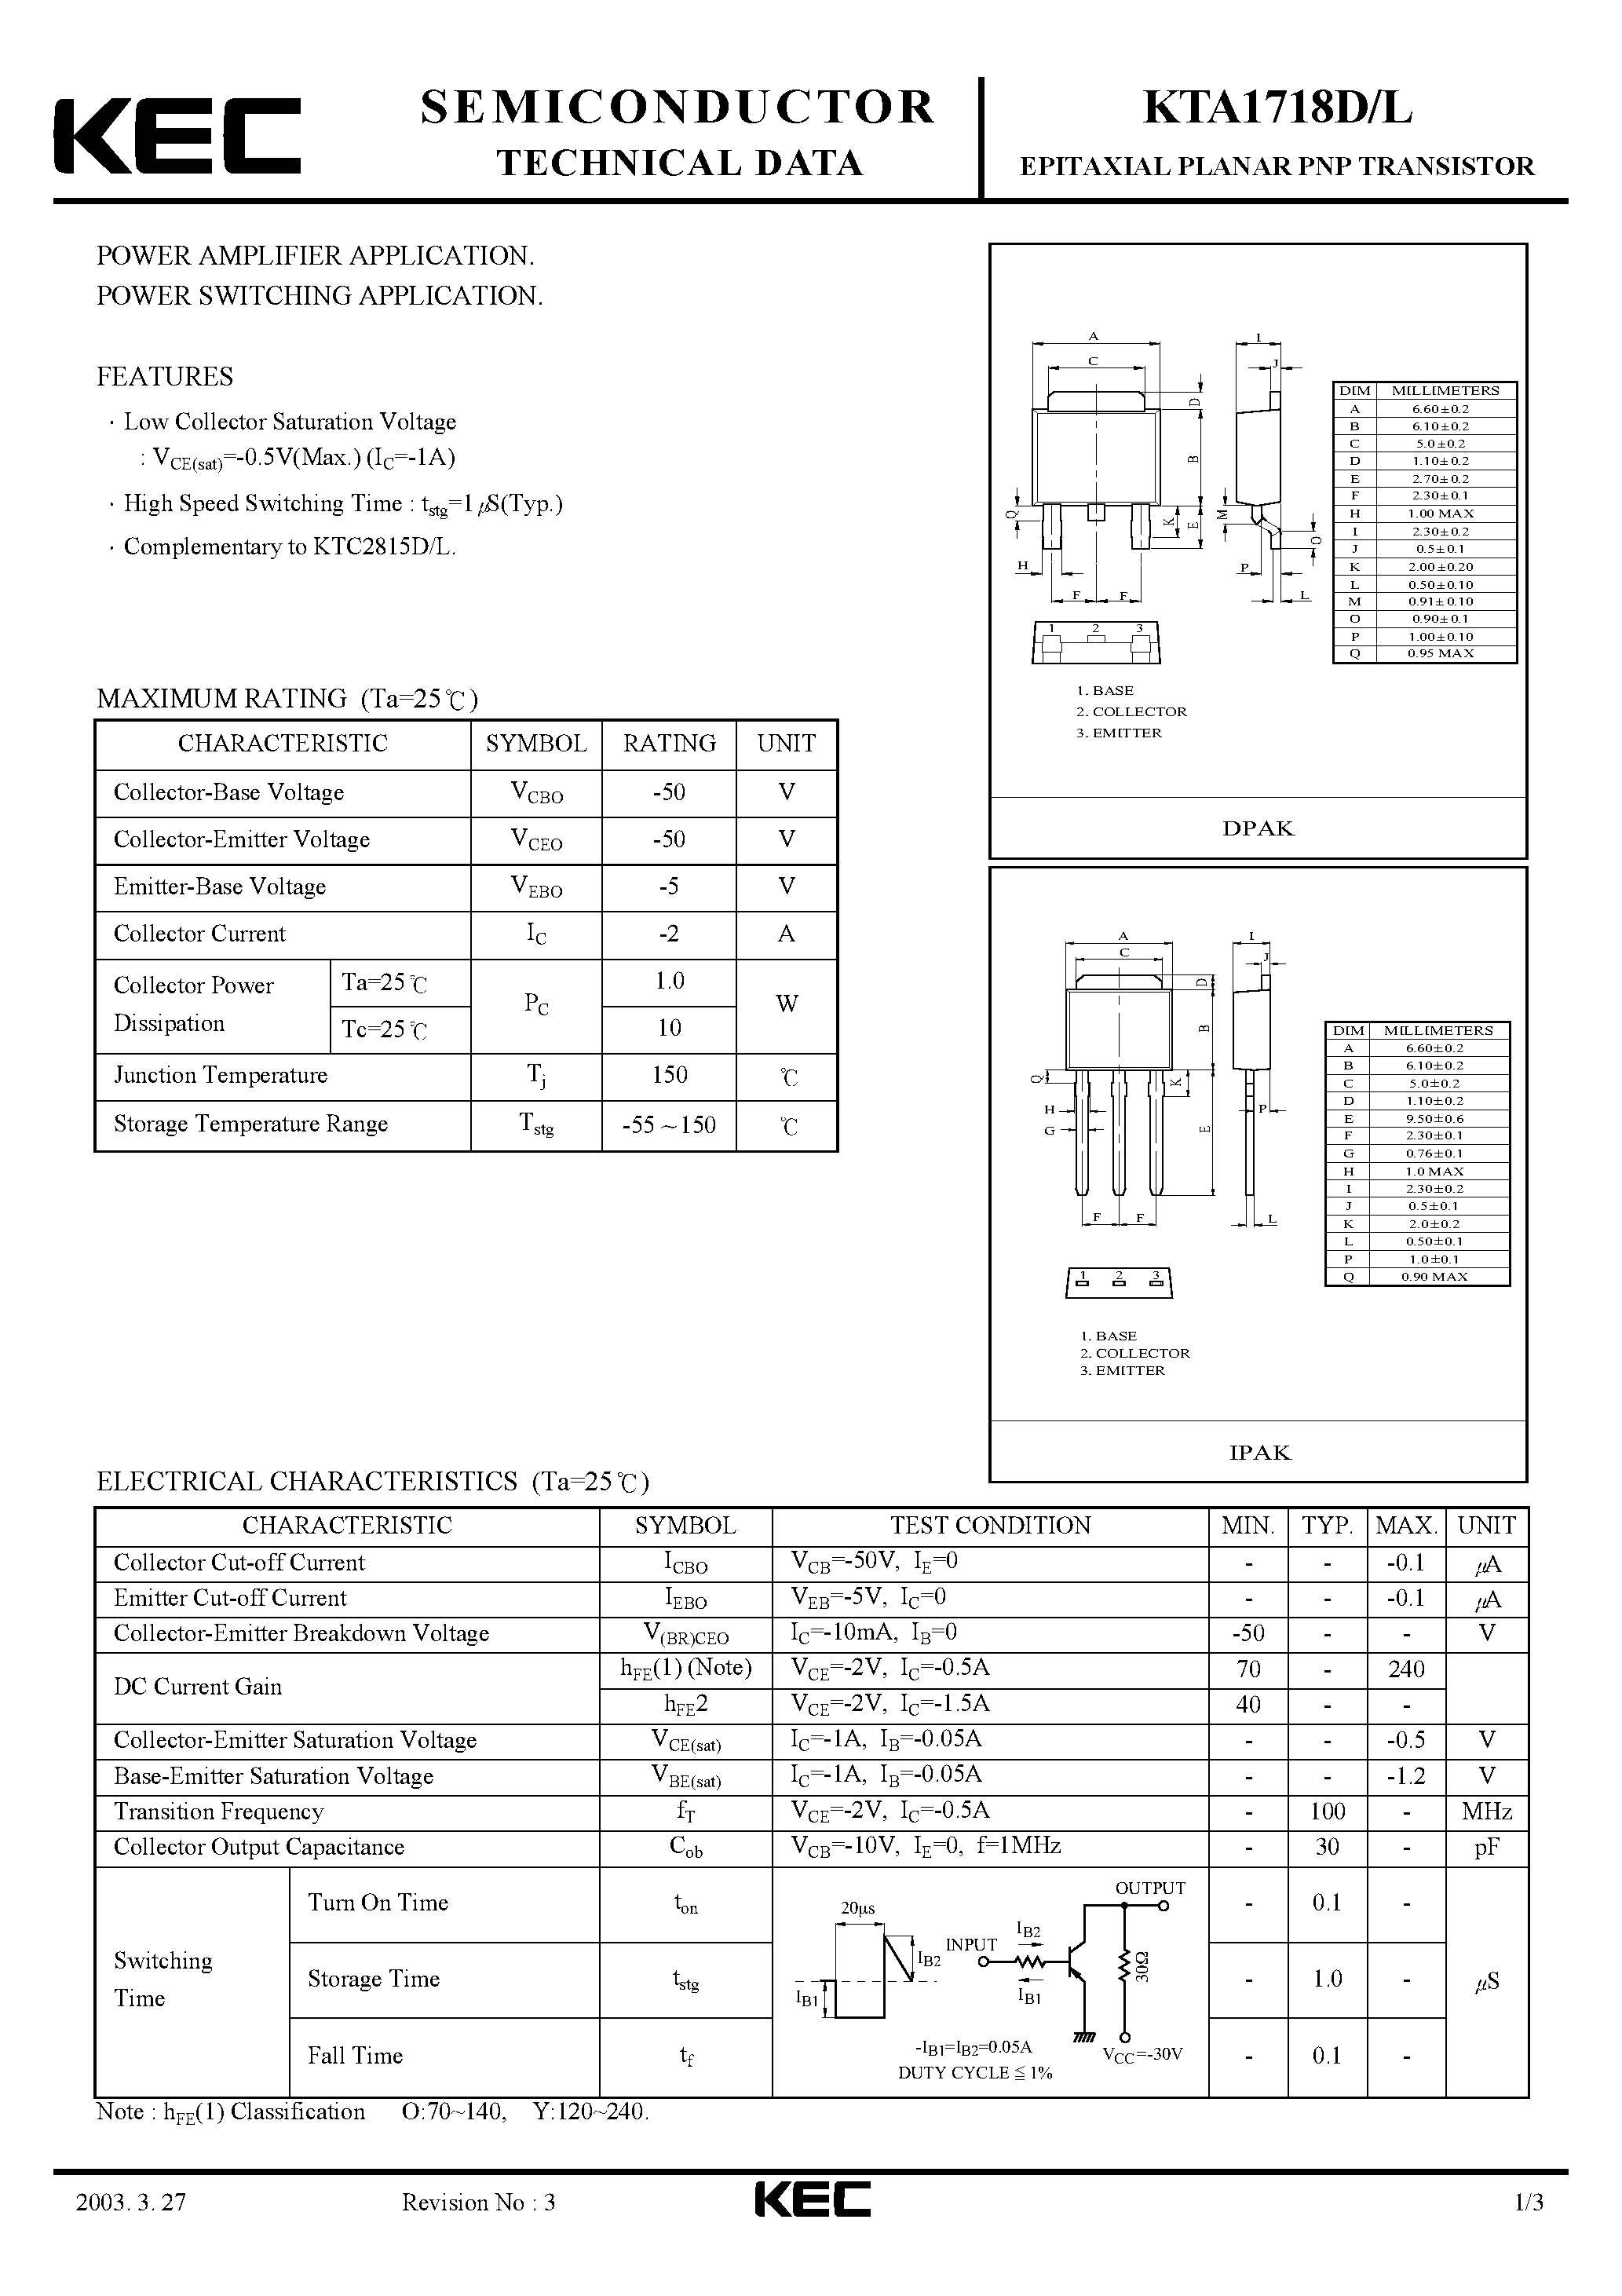 Datasheet KTA1718L - EPITAXIAL PLANAR PNP TRANSISTOR (POWER AMPLIFIER/ POWER SWITCHING) page 1